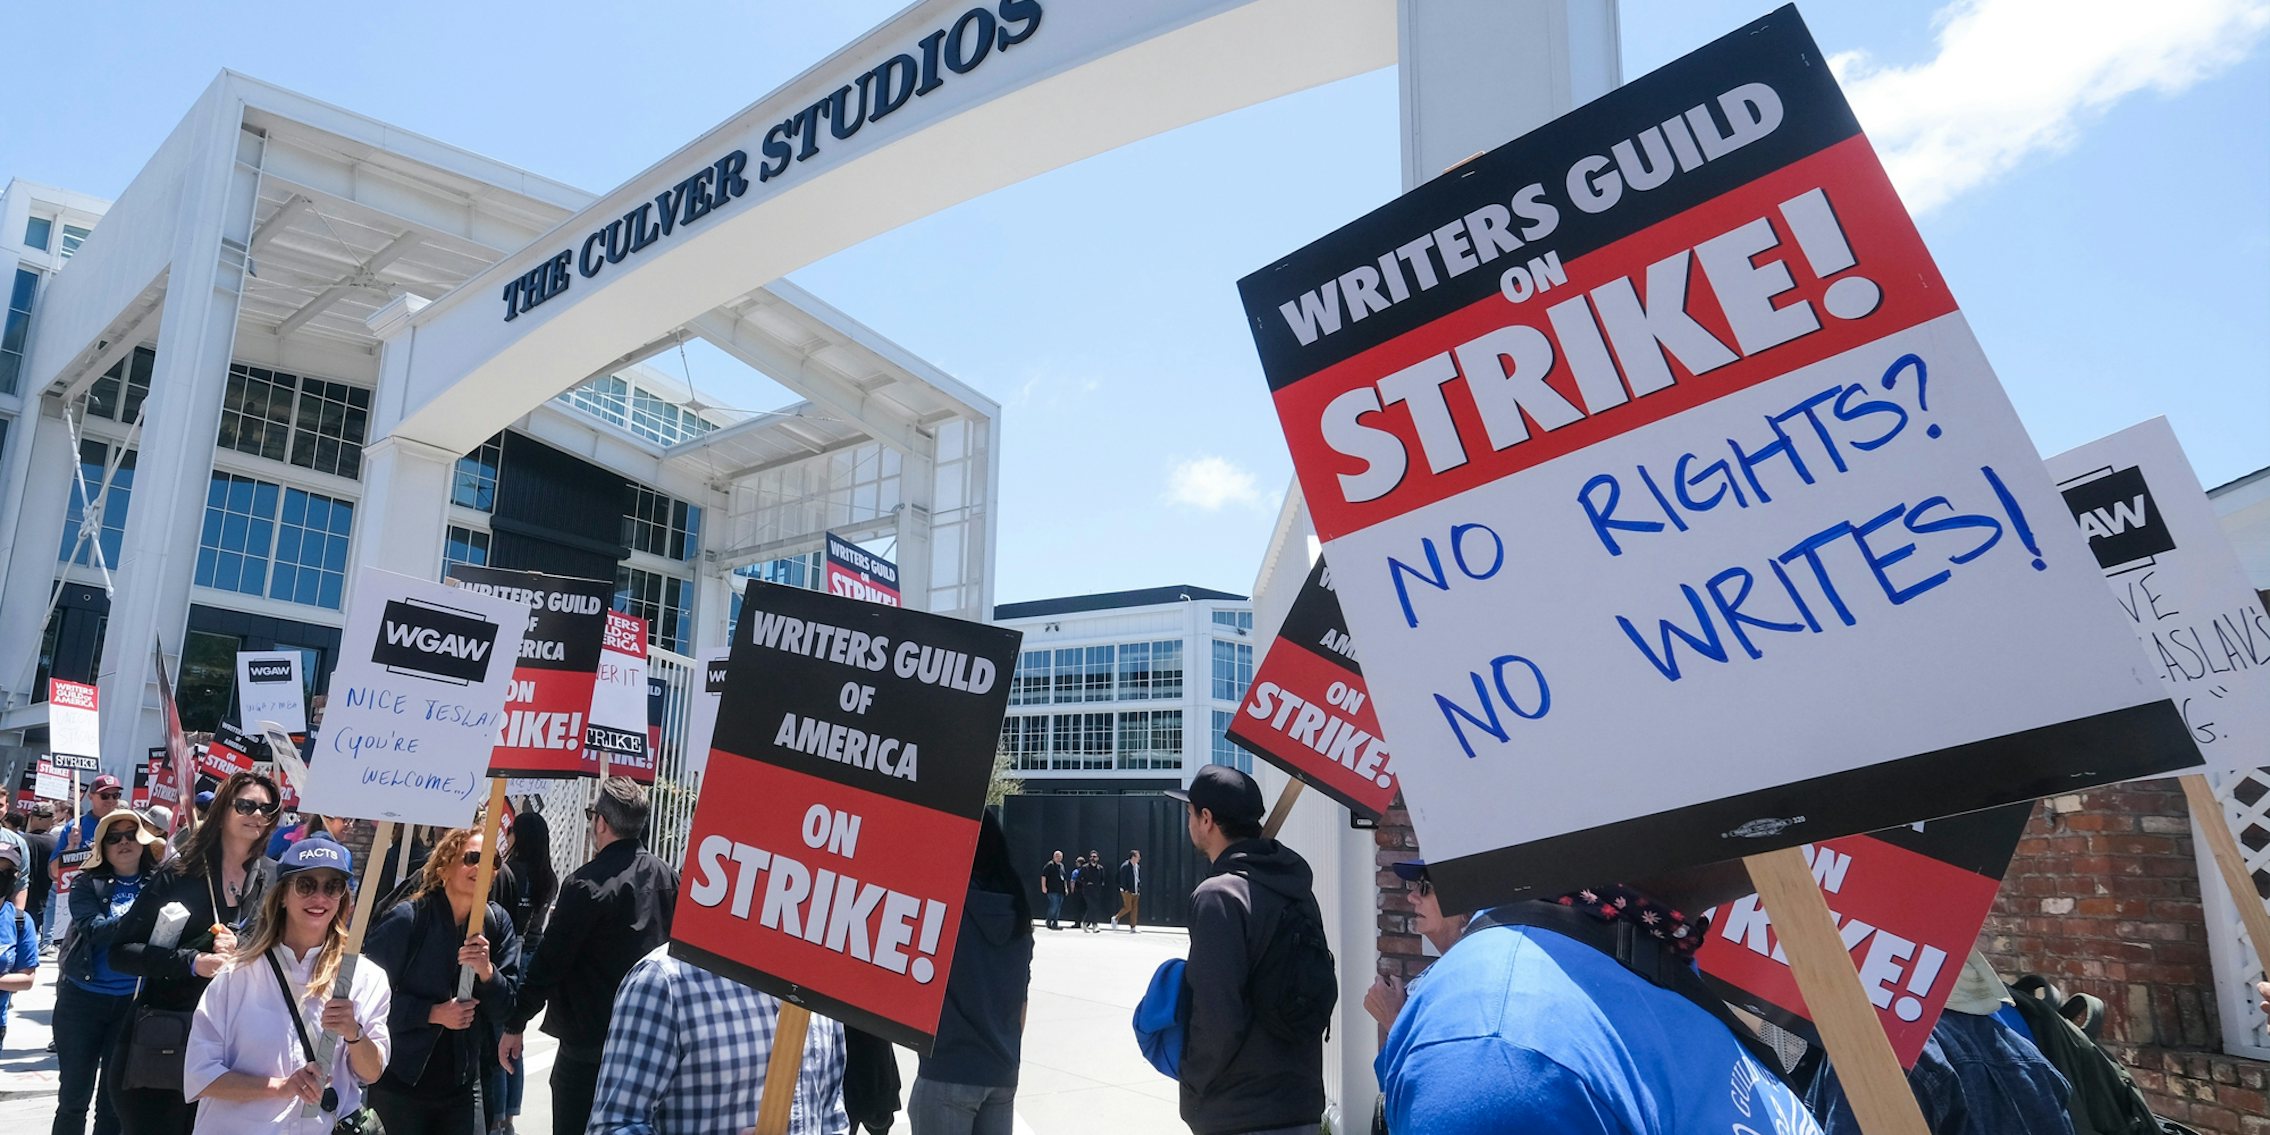 Members of WGA walk with pickets on strike outside Culver Studios